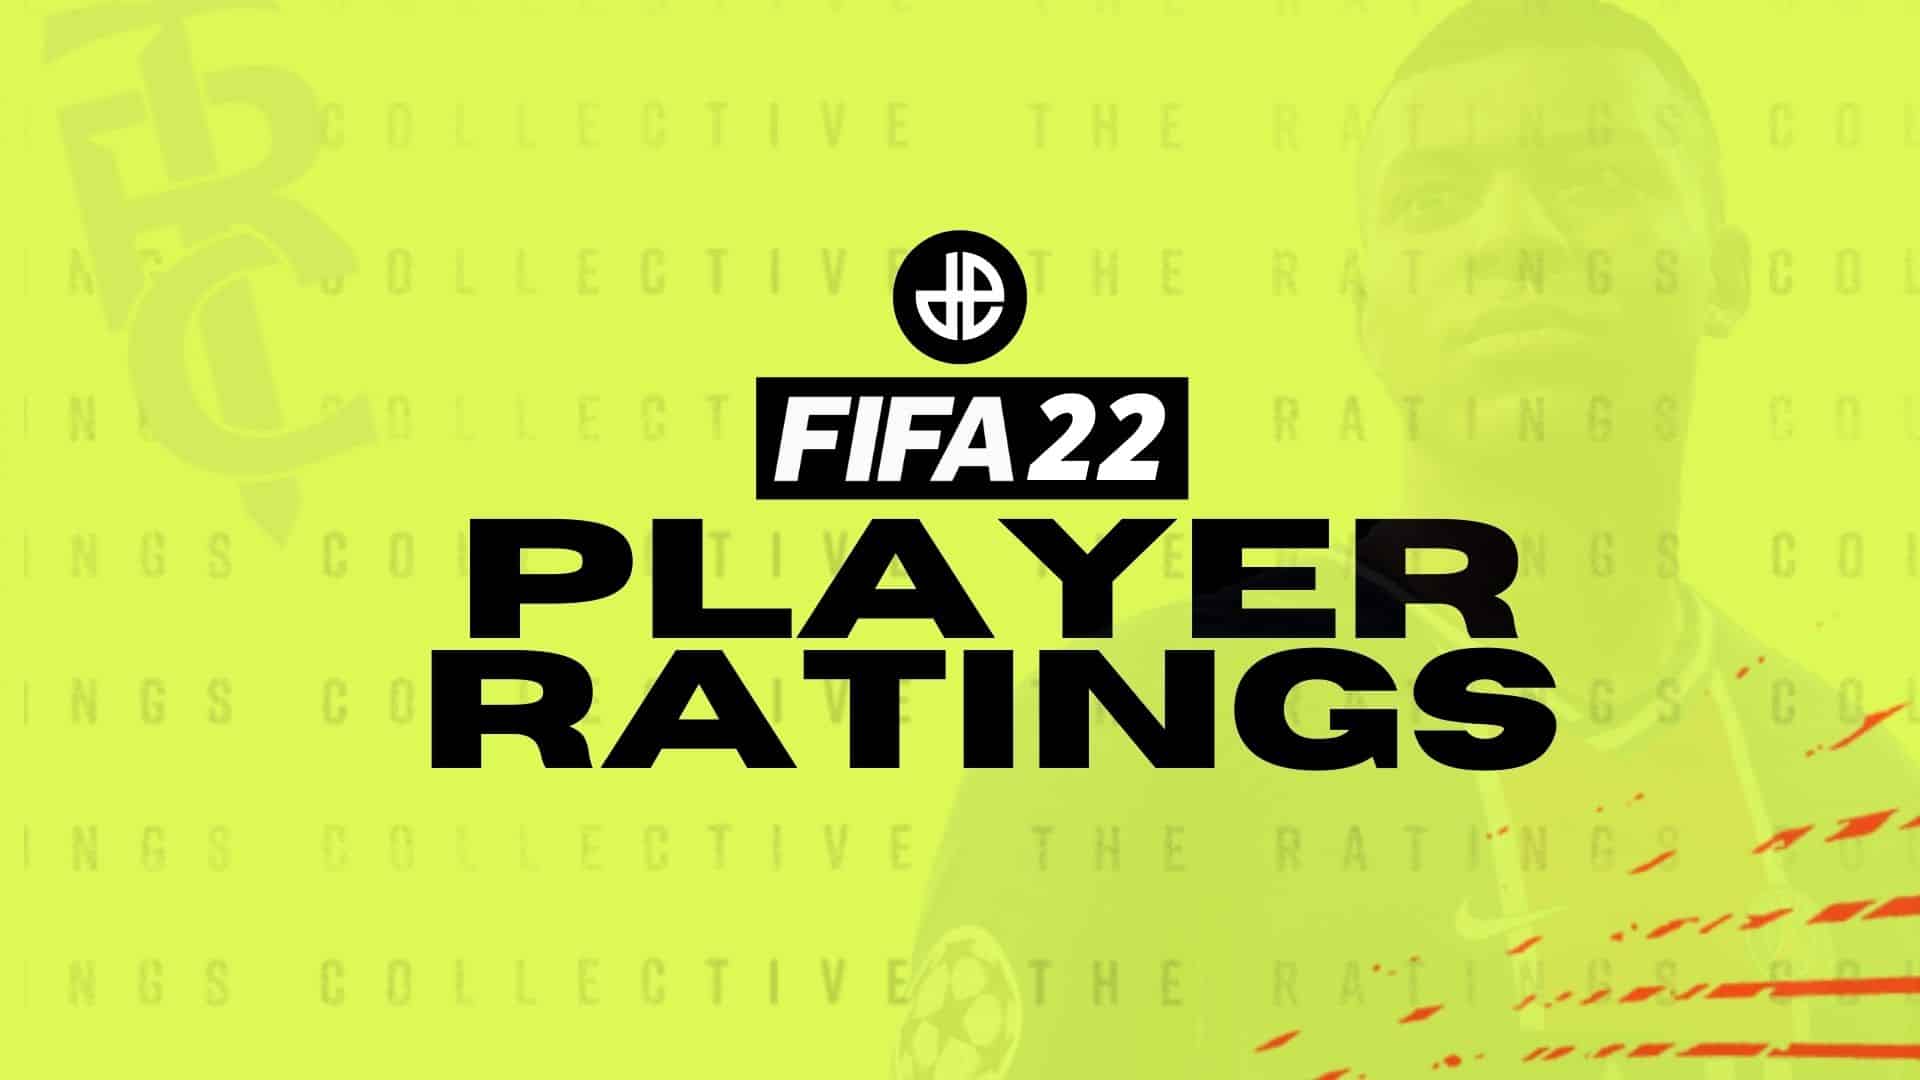 FIFA 22 PLAYER RATINGS